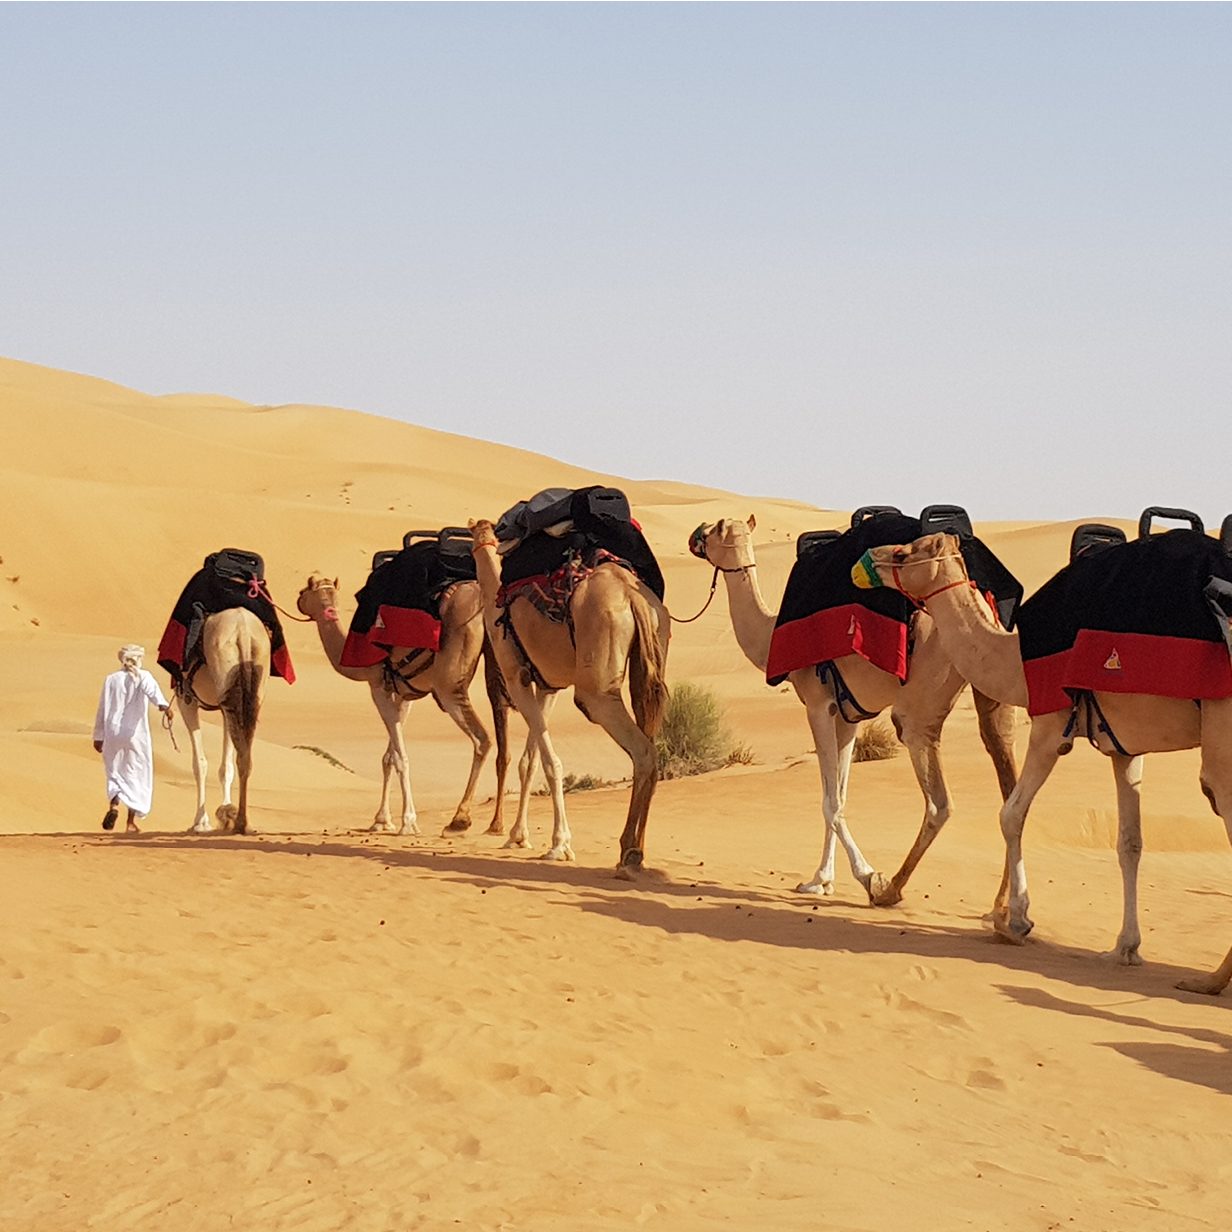 camel safari abu dhabi